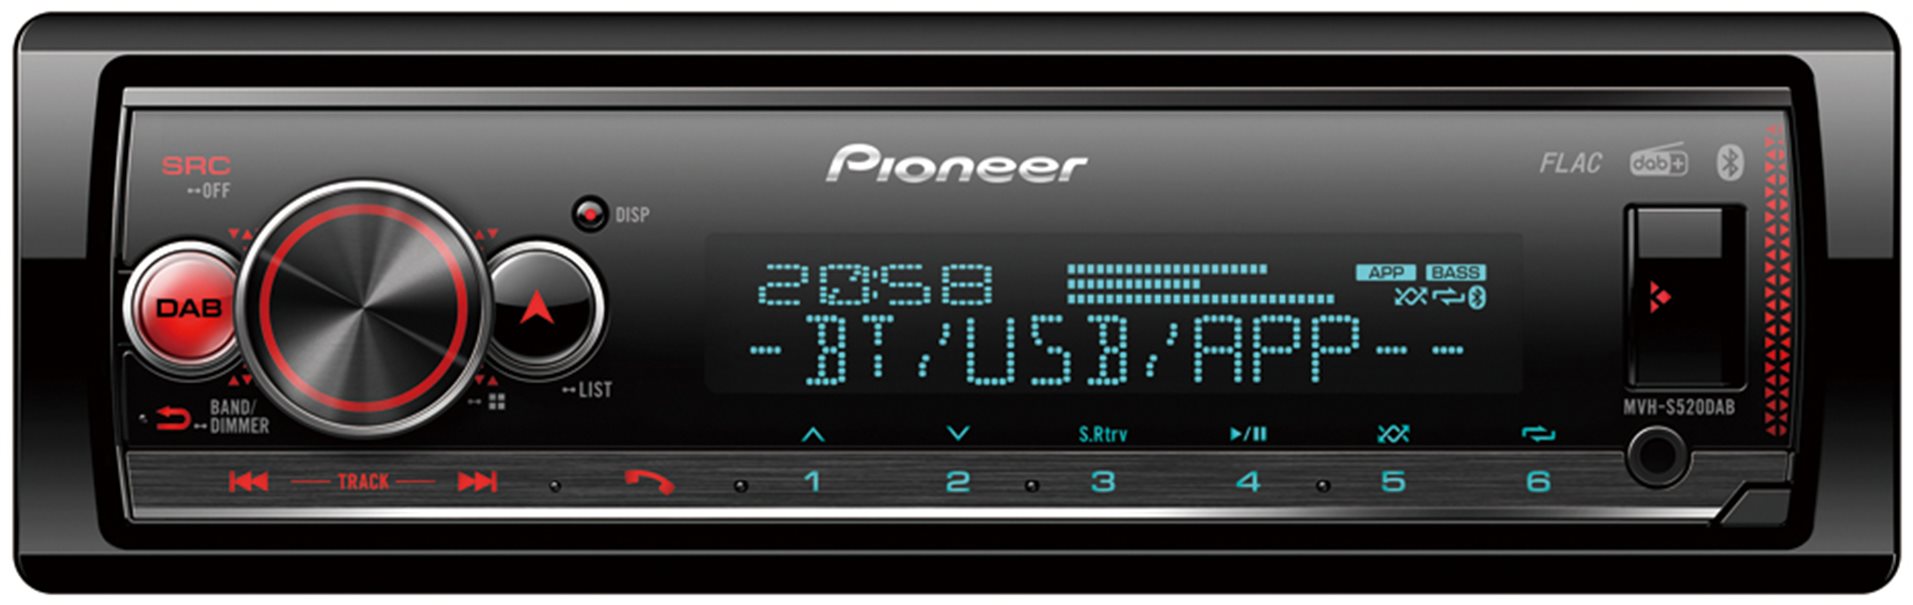 Autórádió Pioneer MVH-S520DAB